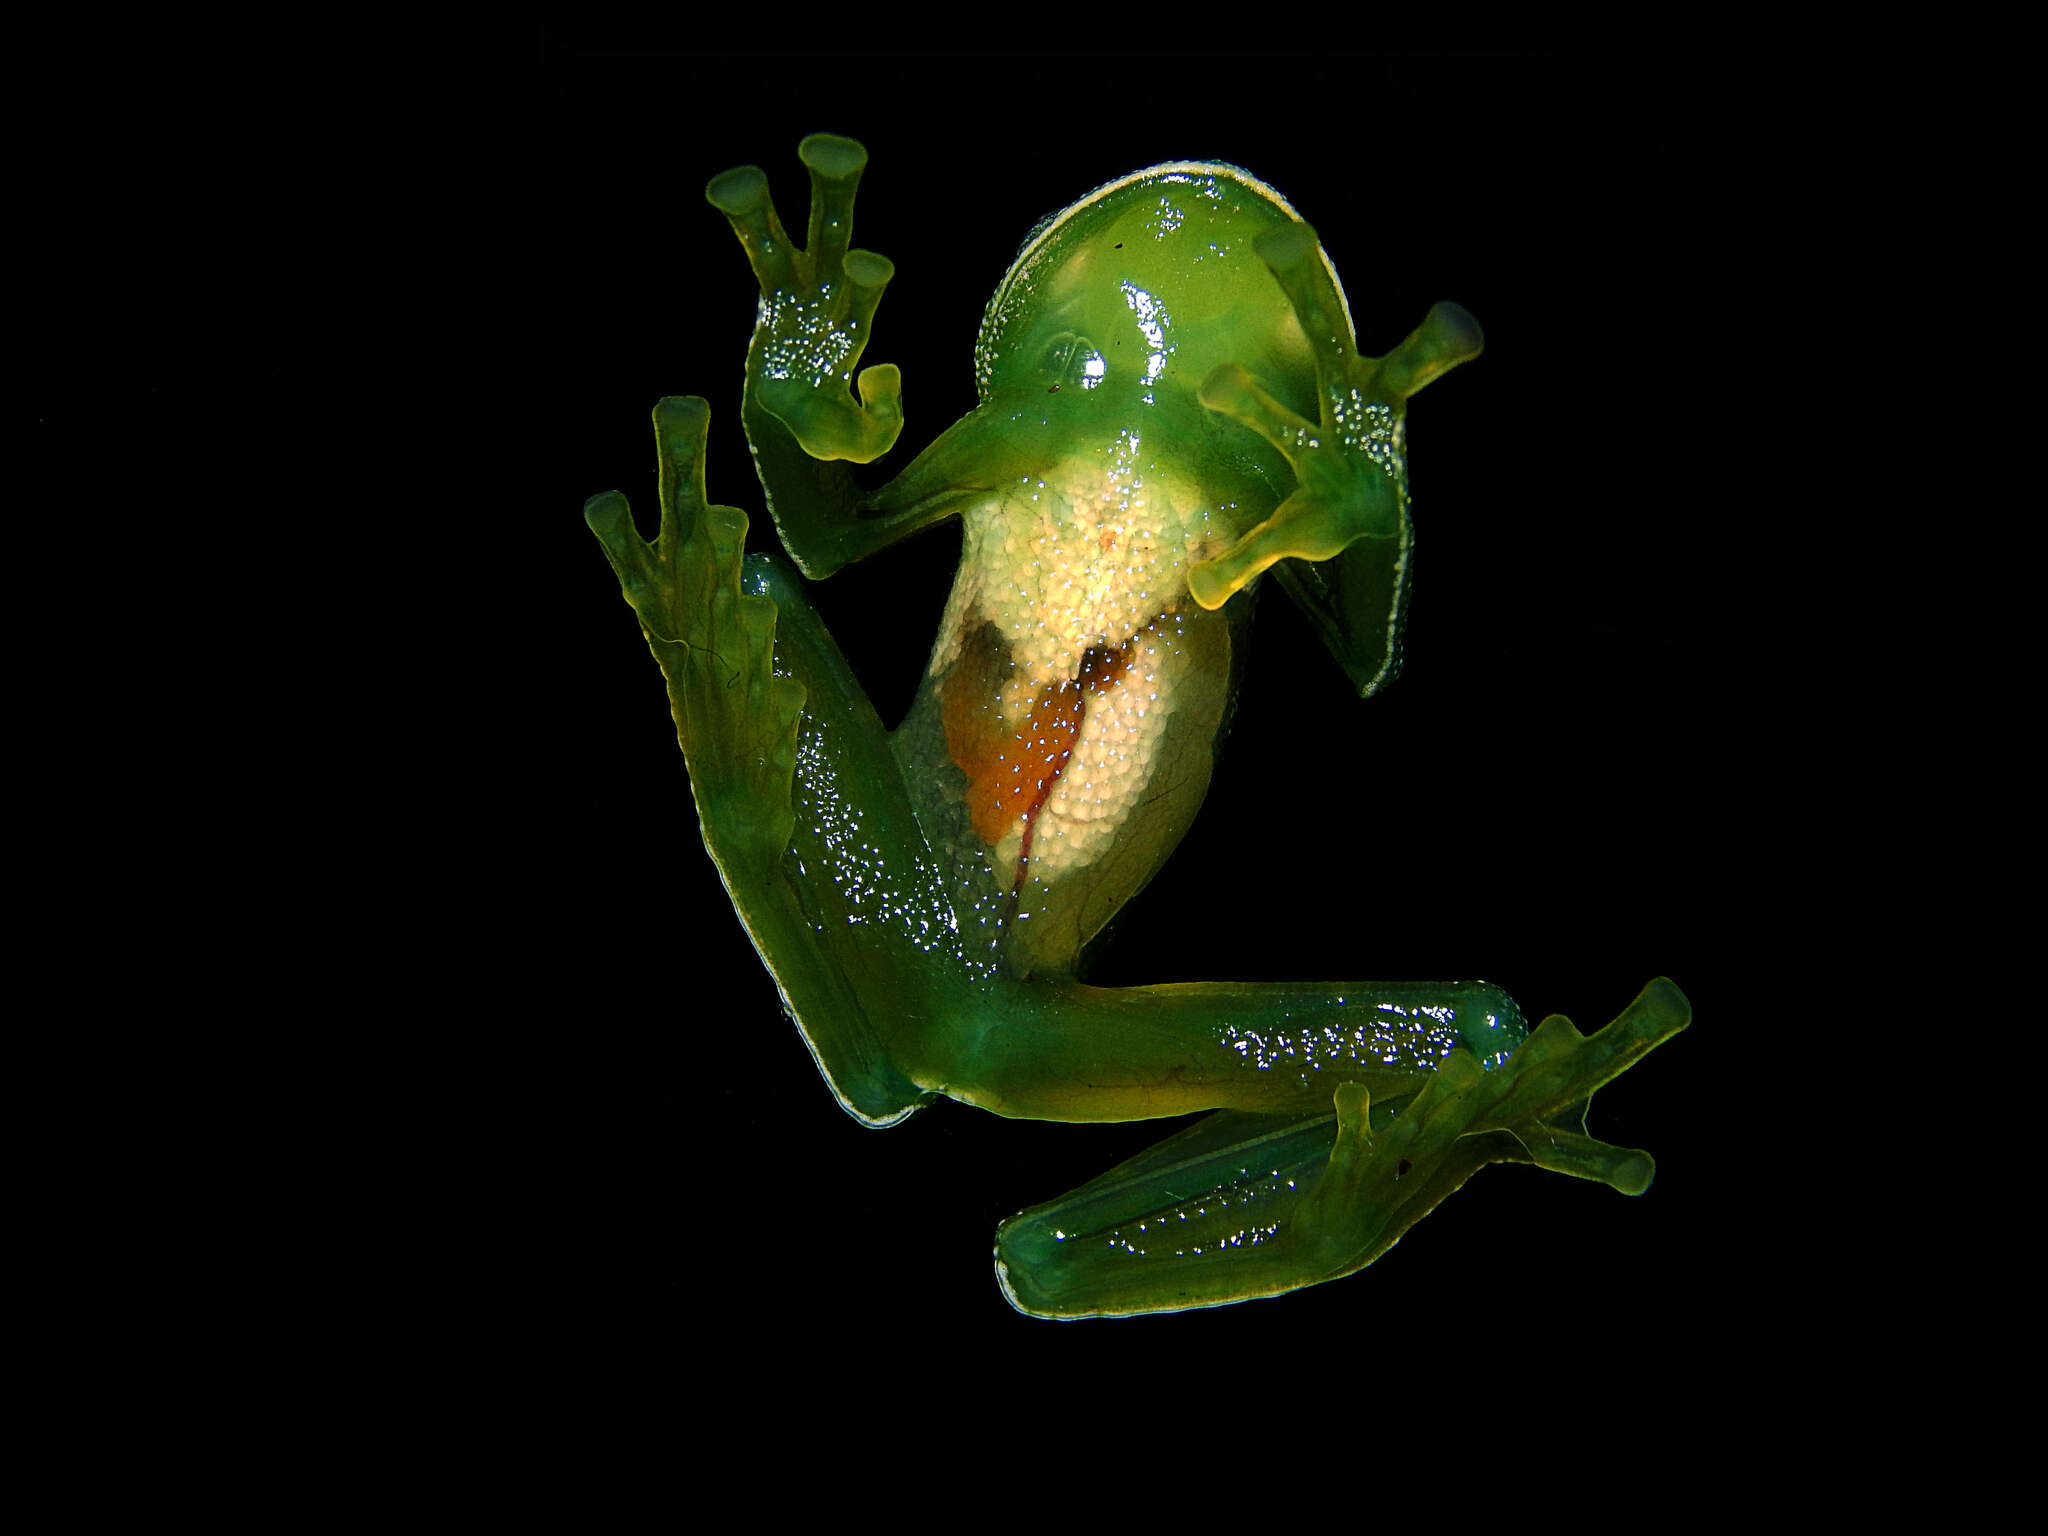 Image of Savage's cochran frog